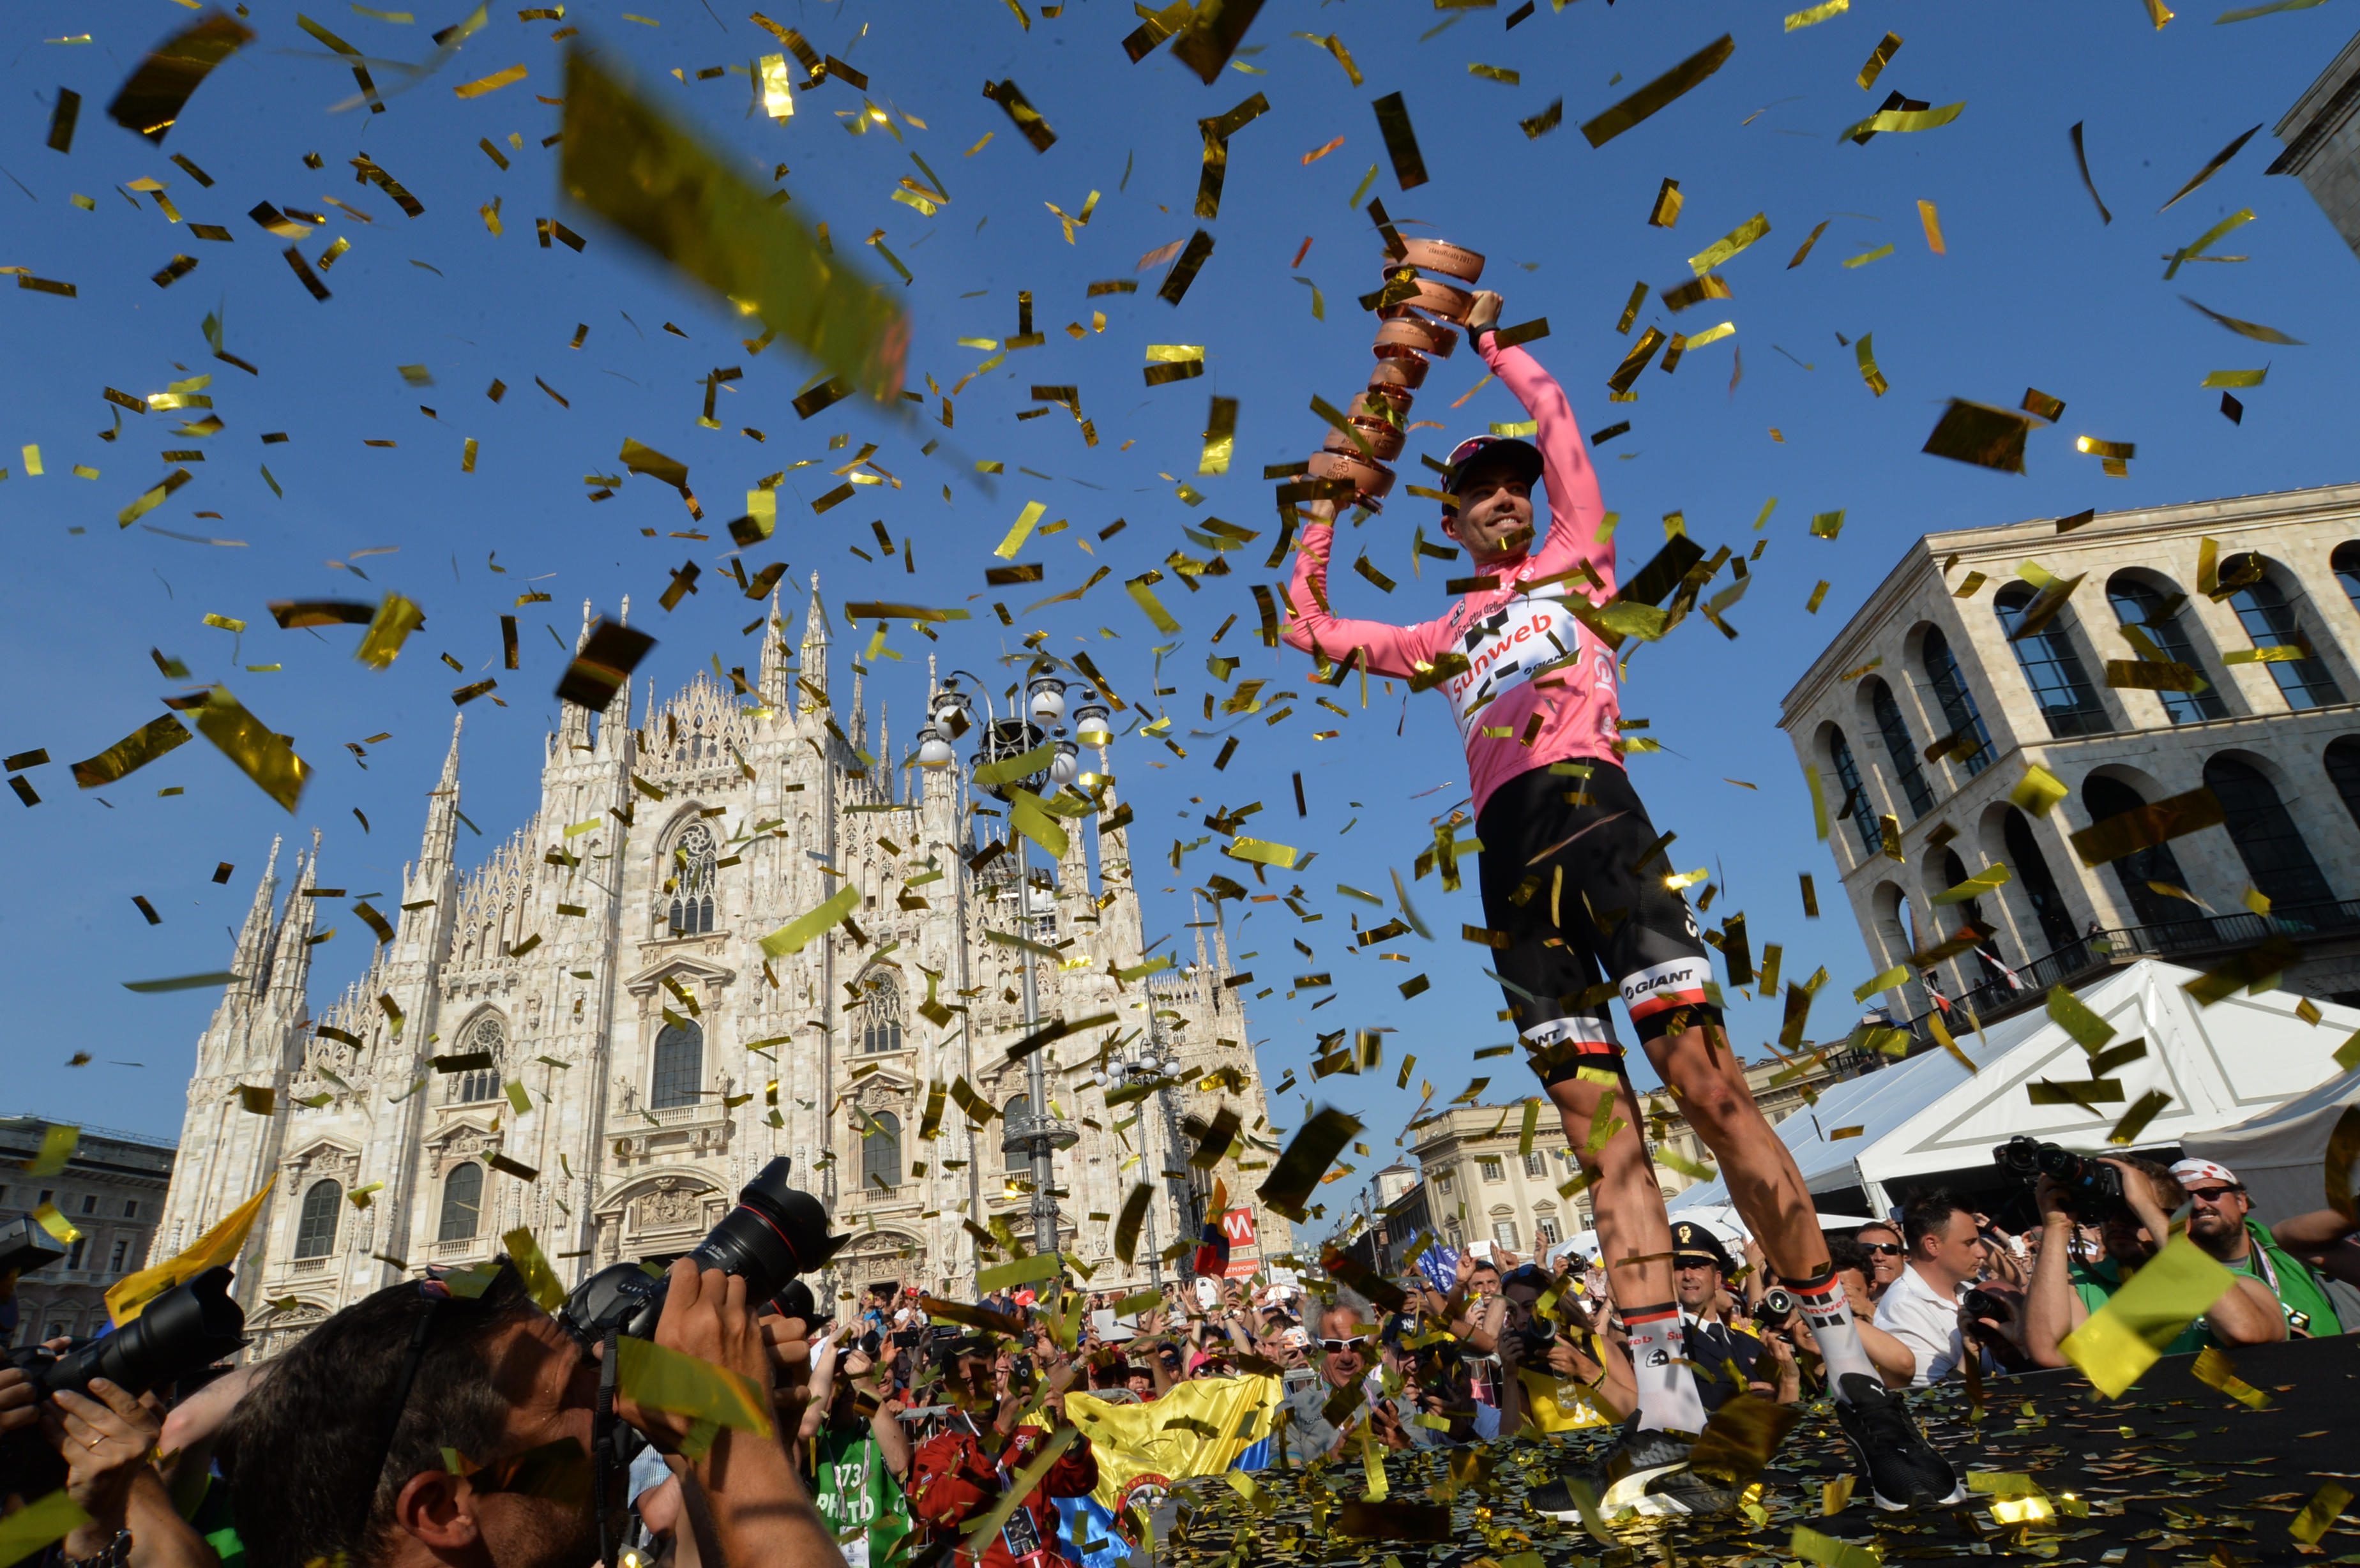 28-05-2017 Giro D'italia; Tappa 21 Monza - Milano; 2017, Team Sunweb; Dumoulin, Tom; Milano Piazza Duomo;